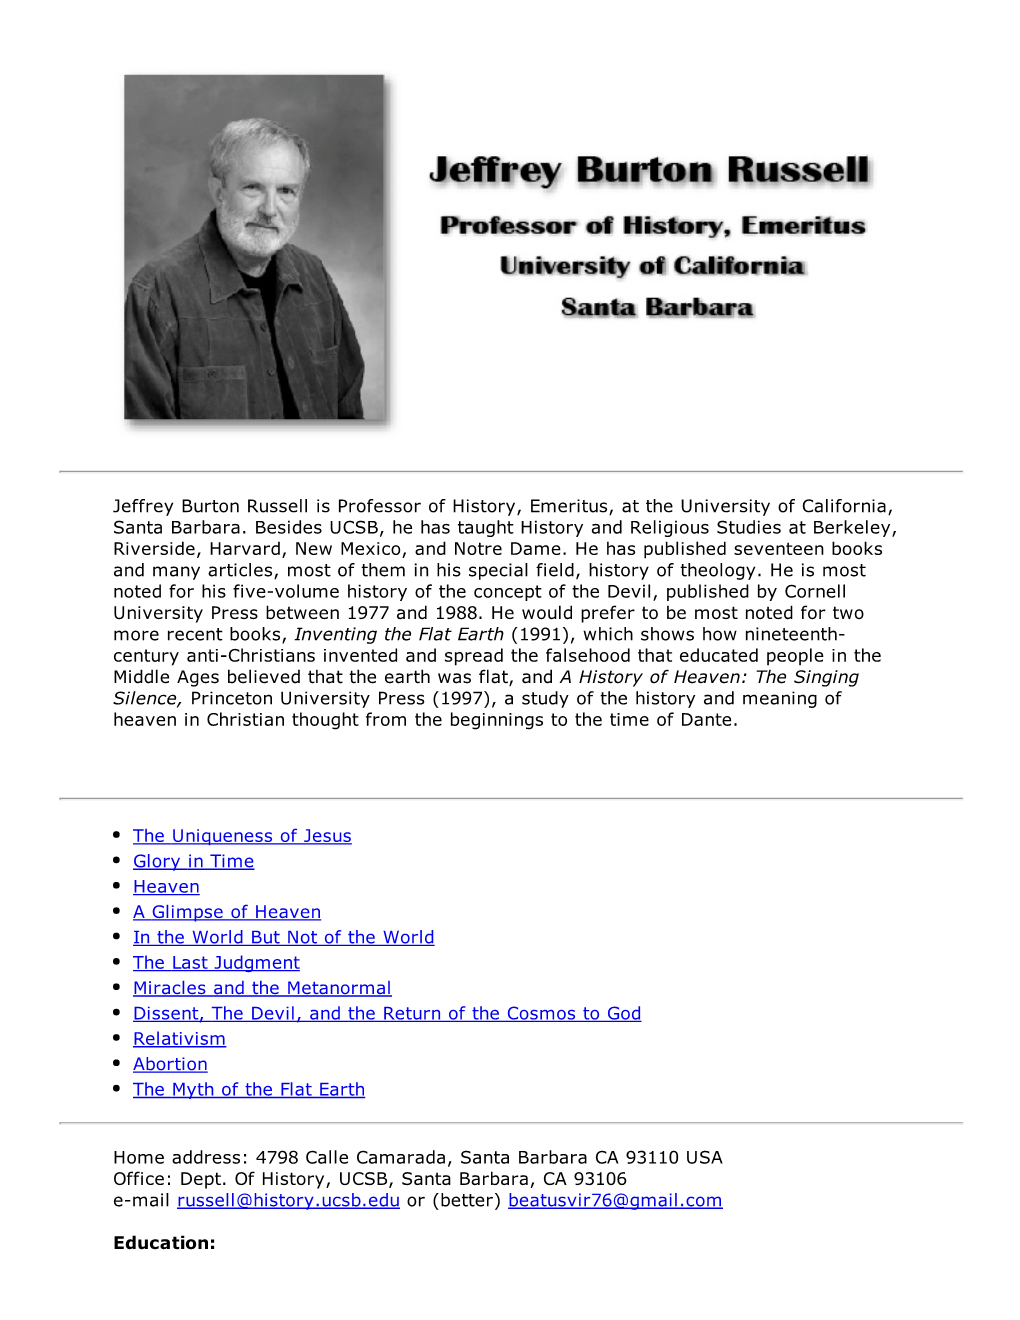 Jeffrey Burton Russell Is Professor of History, Emeritus, at the University of California, Santa Barbara